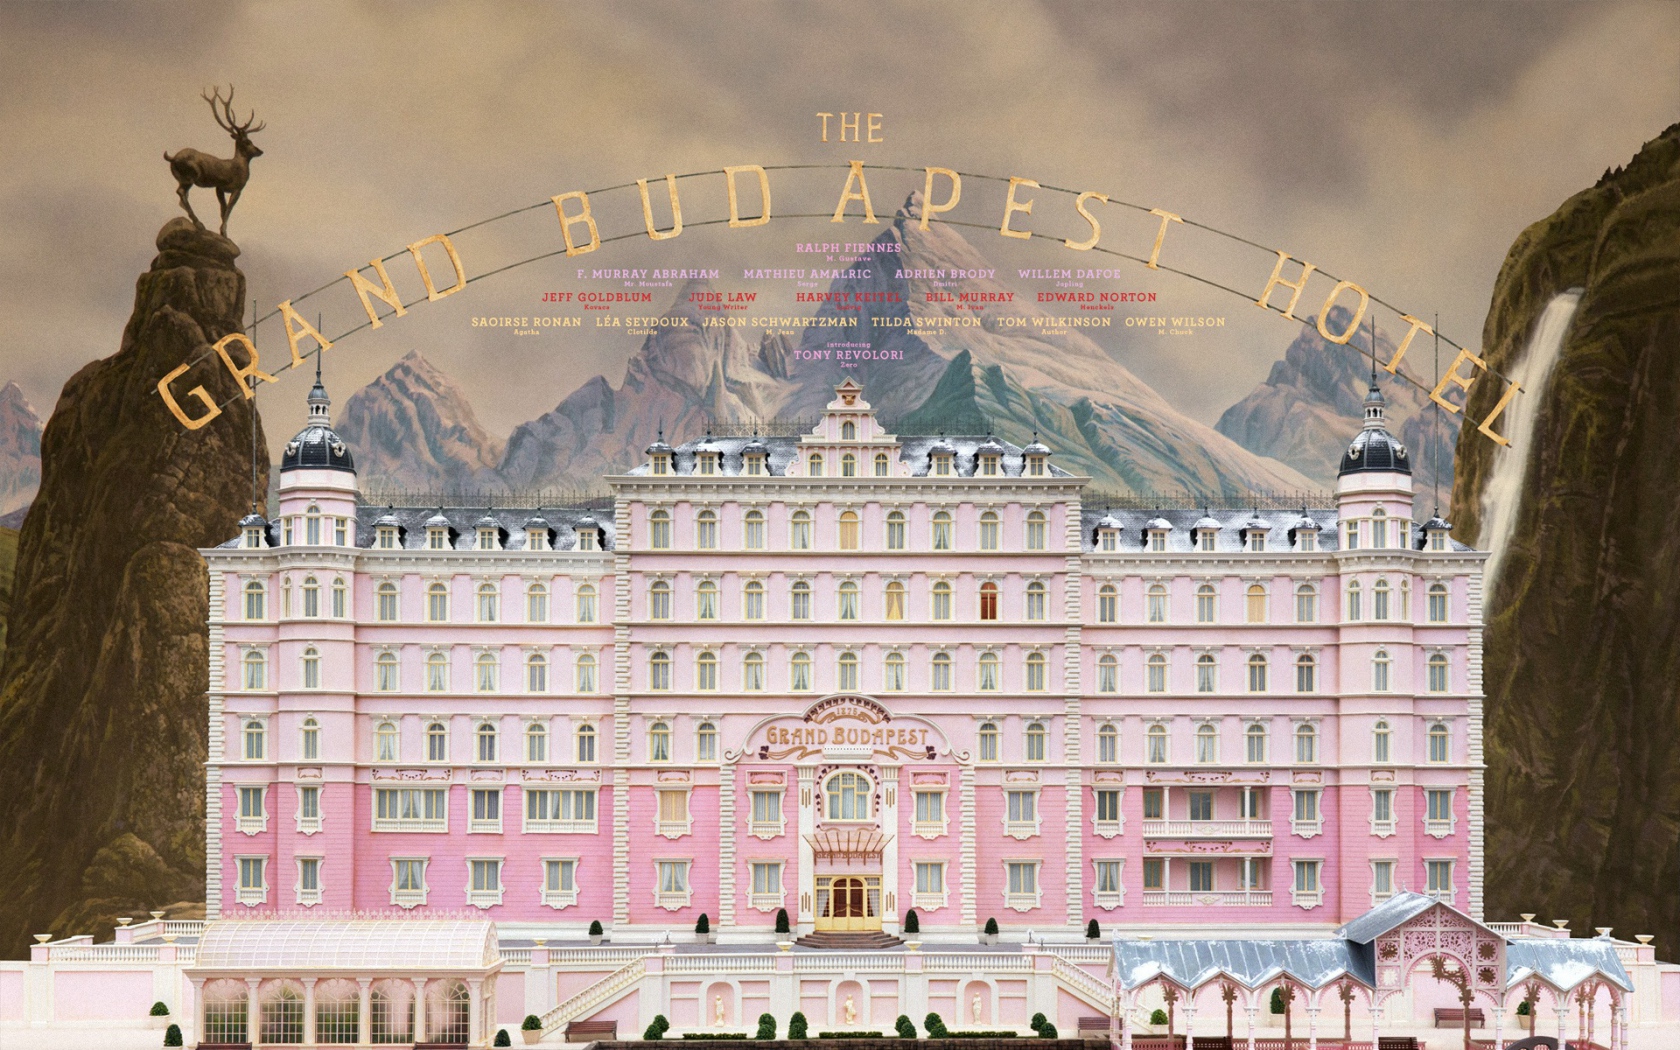 the grand budapest hotel, movie, budapest, hotel, poster